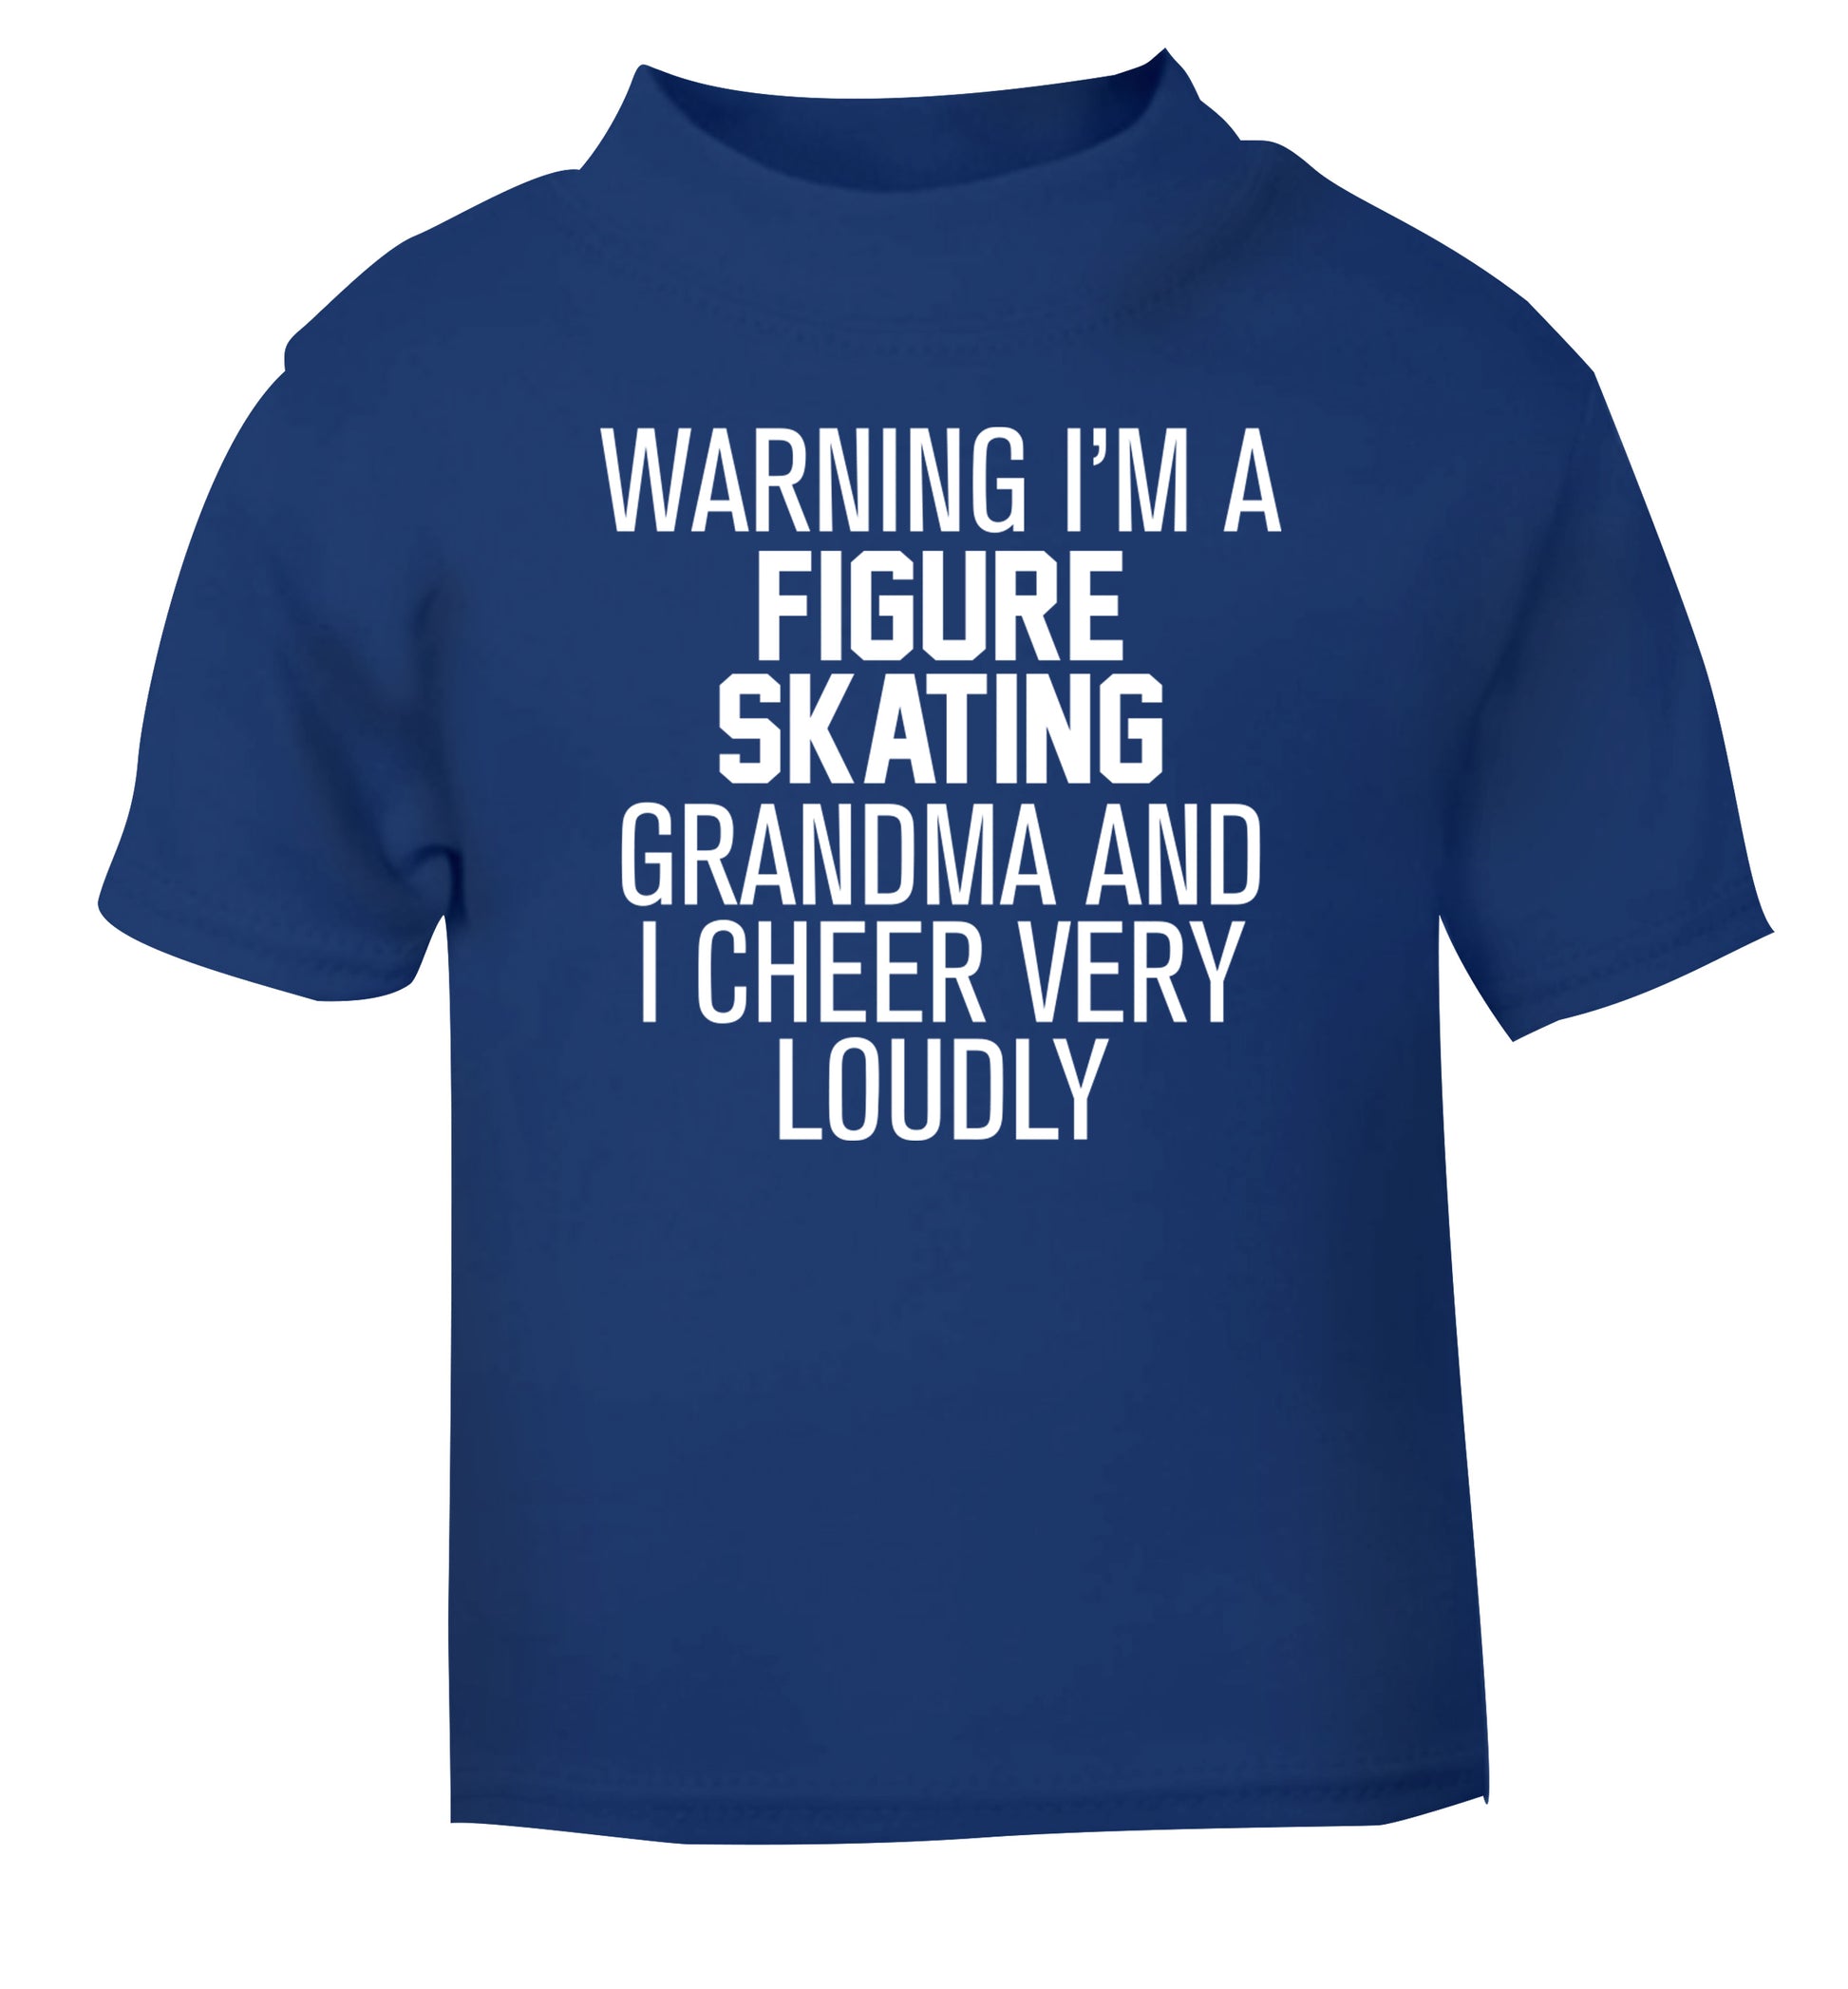 Warning I'm a figure skating grandma and I cheer very loudly blue Baby Toddler Tshirt 2 Years